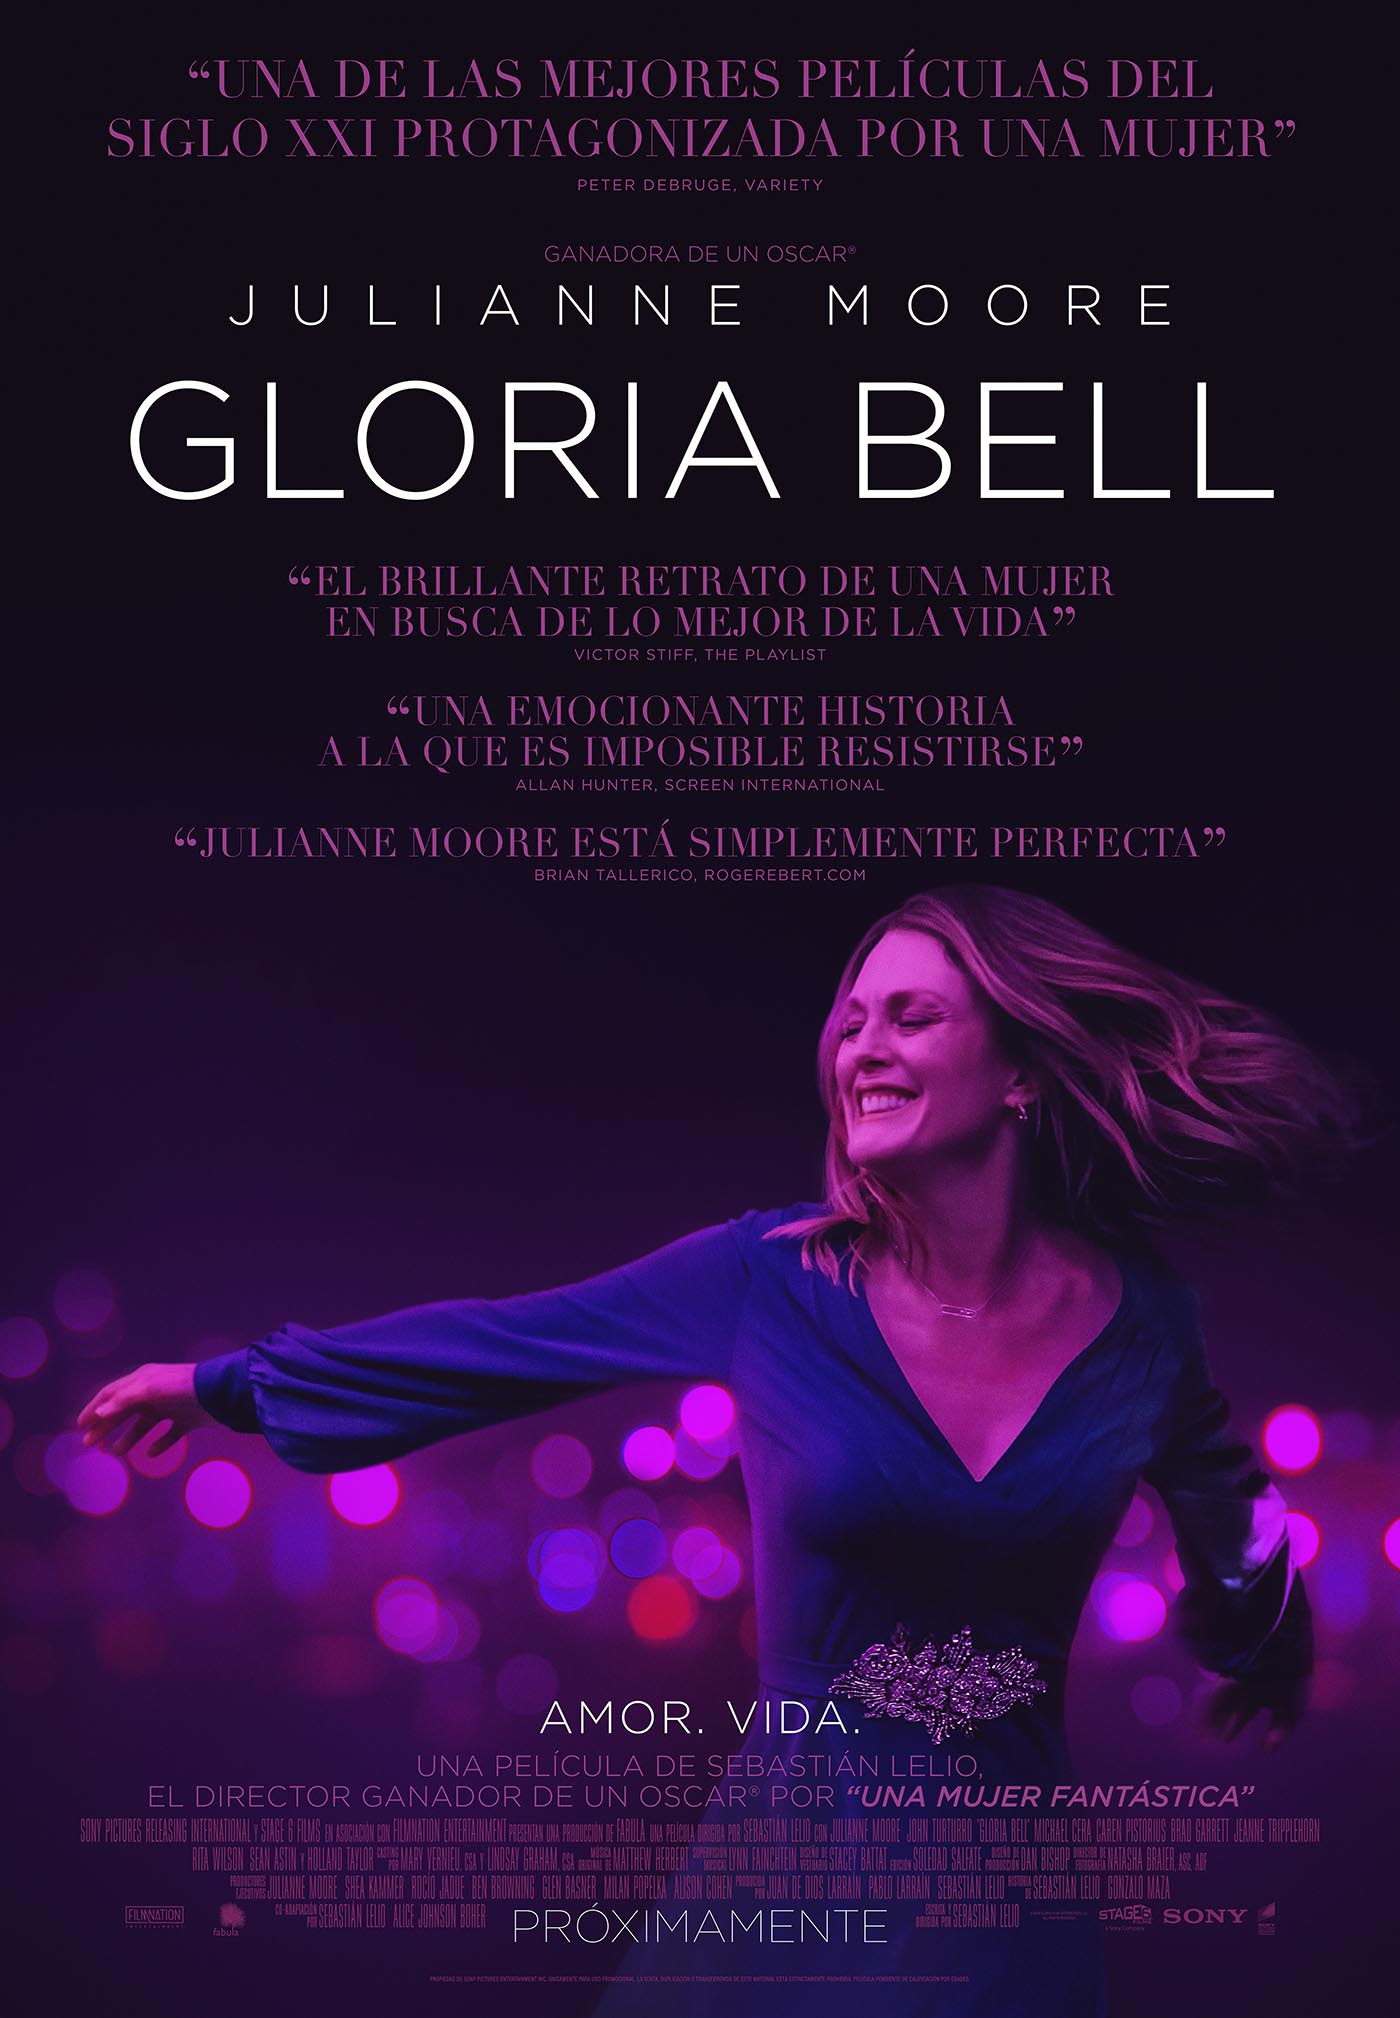 Tráiler de ‘Gloria bell’ protagonizada por Julianne Moore